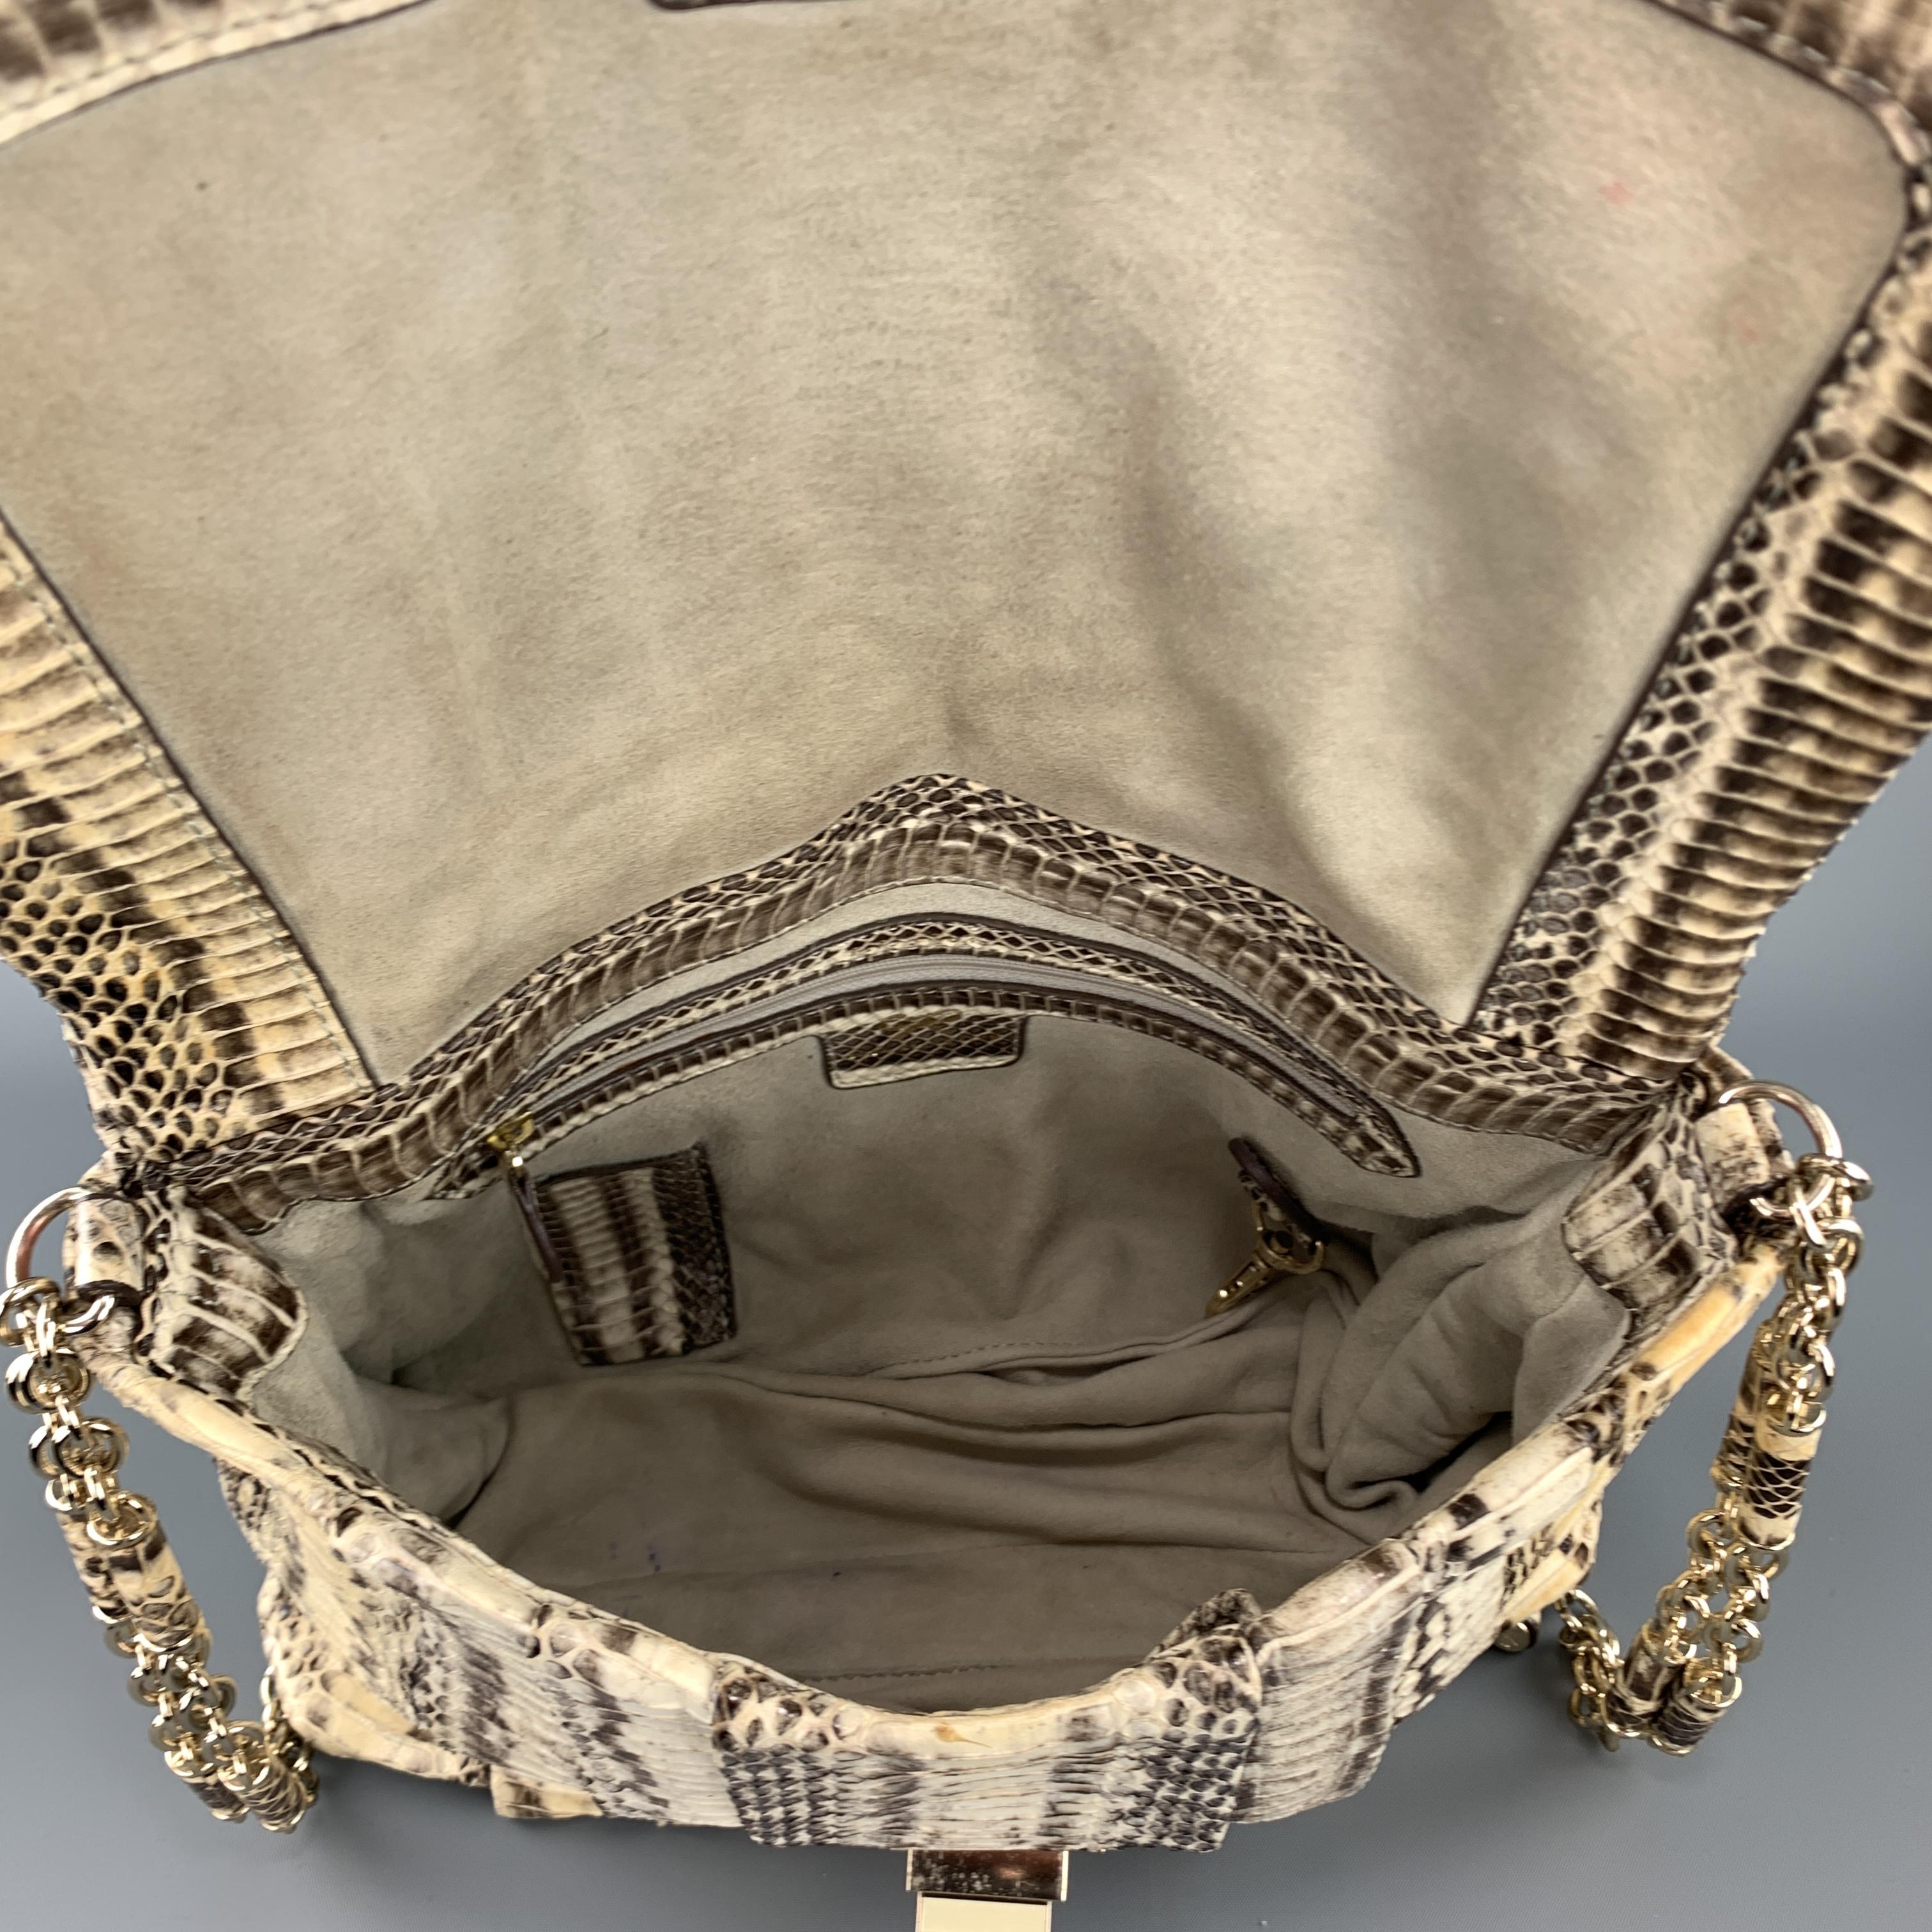 ANYA HINDMARCH Beige Phython Skin Leather Shain Strap Shoulder Bag 3